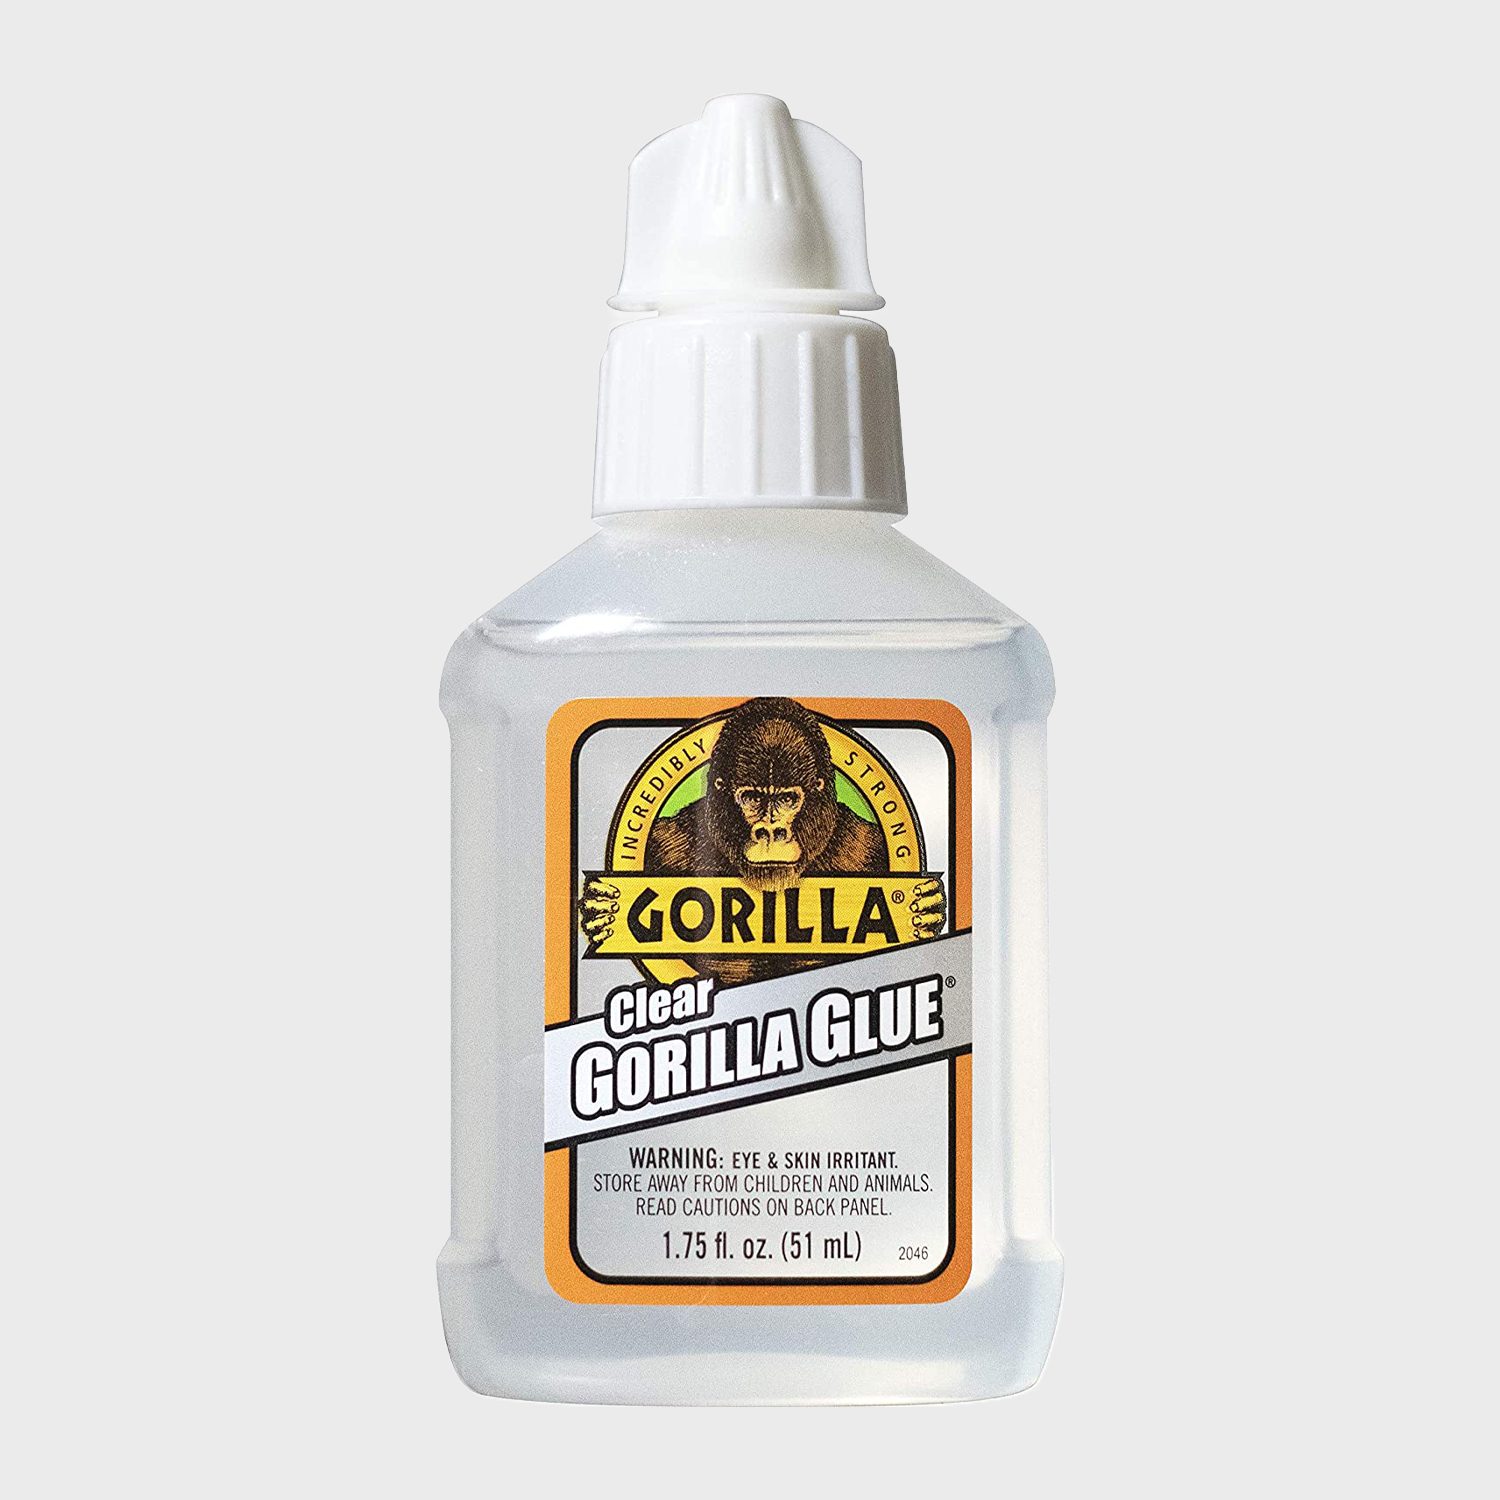 Gorilla 4 Oz. Dries Clear Wood Glue - Town Hardware & General Store